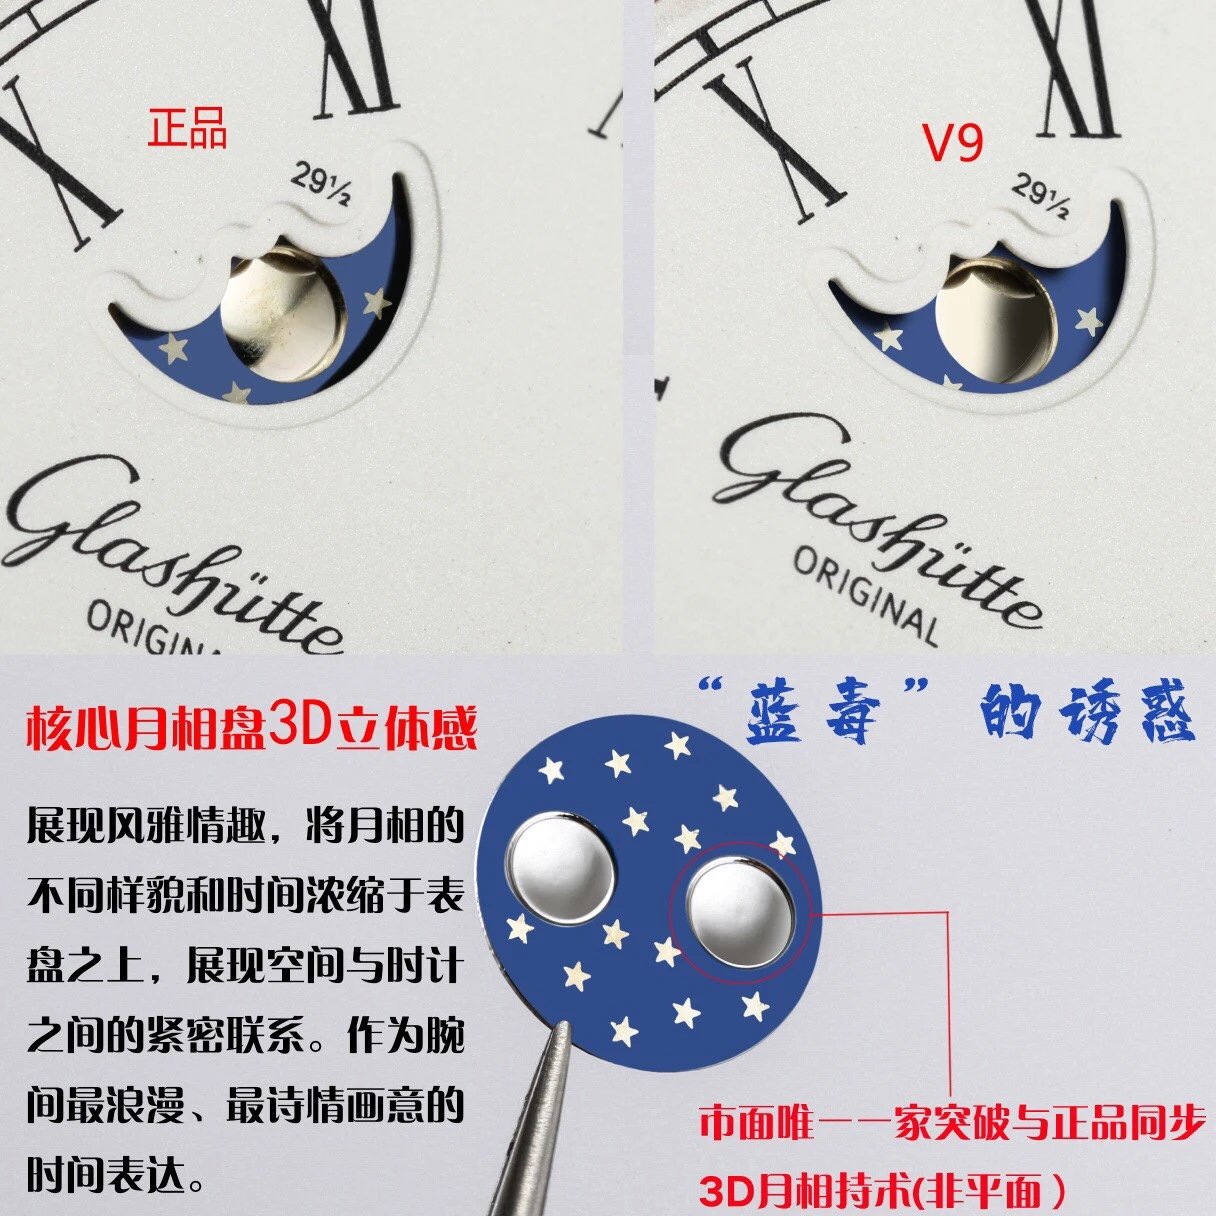 V9厂 格拉苏蒂原创议员大日历月相腕表，独家3D月相盘，双跳日历，部分配件可与原装互换，尺寸40x12.2mm